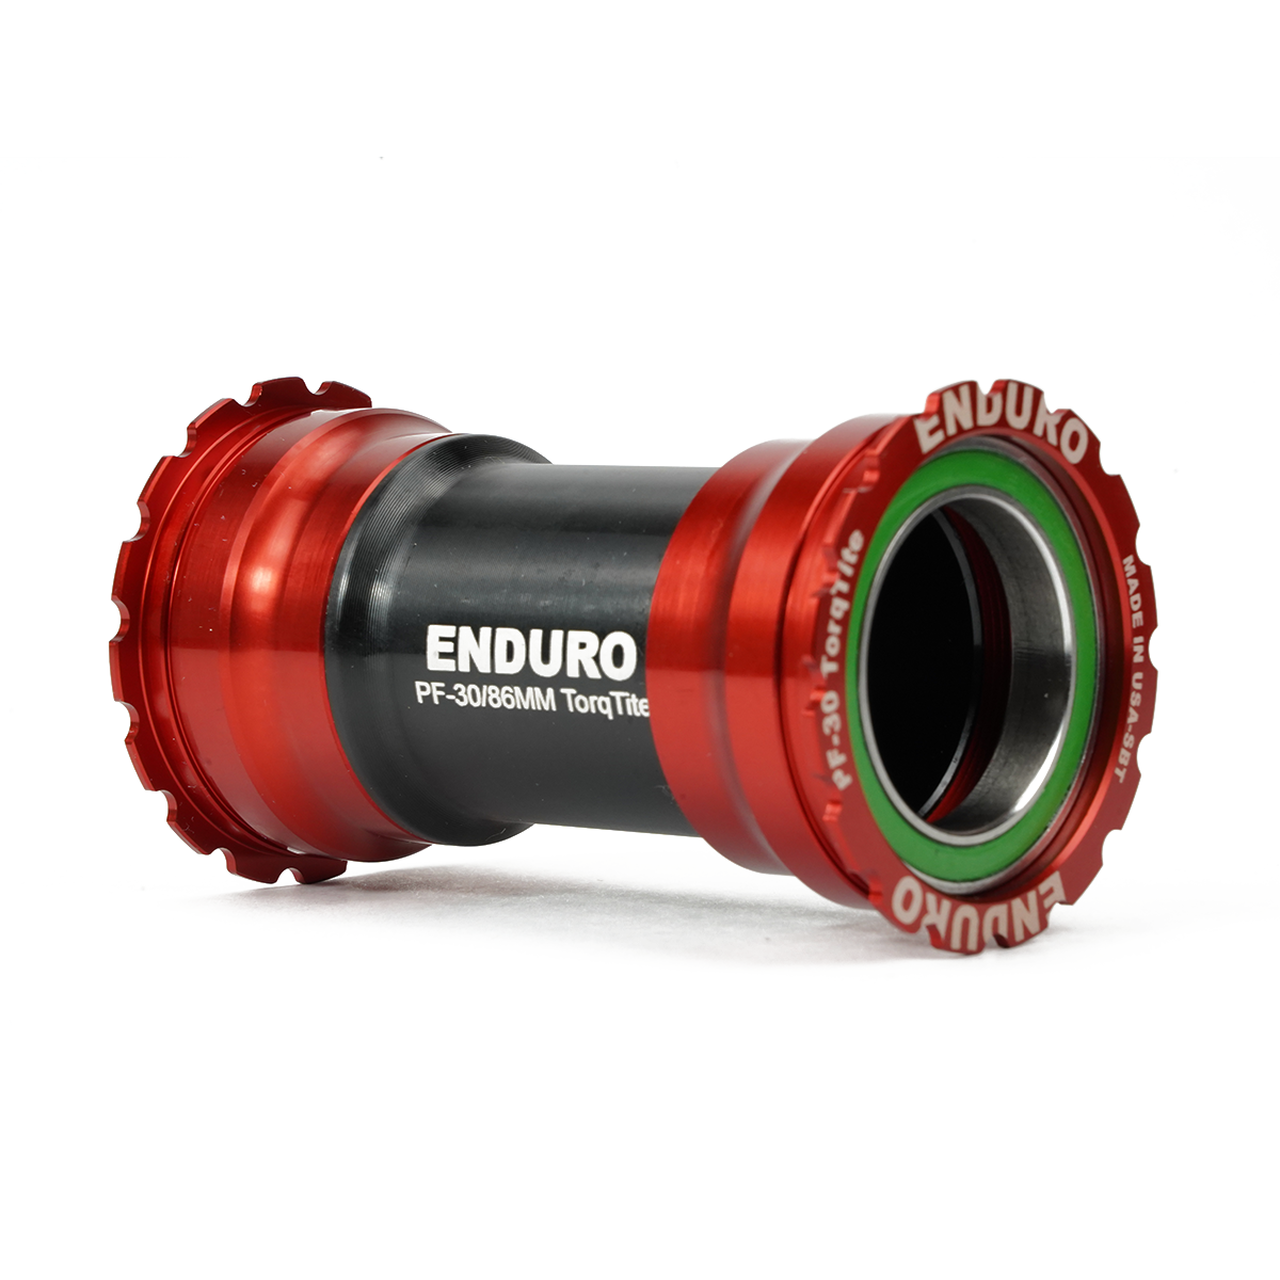 Enduro BKS-0160 - TorqTite, Stainless Steel, Angular Contact, Bearing Bottom Bracket for BB386 Framesets and 30mm Cranksets